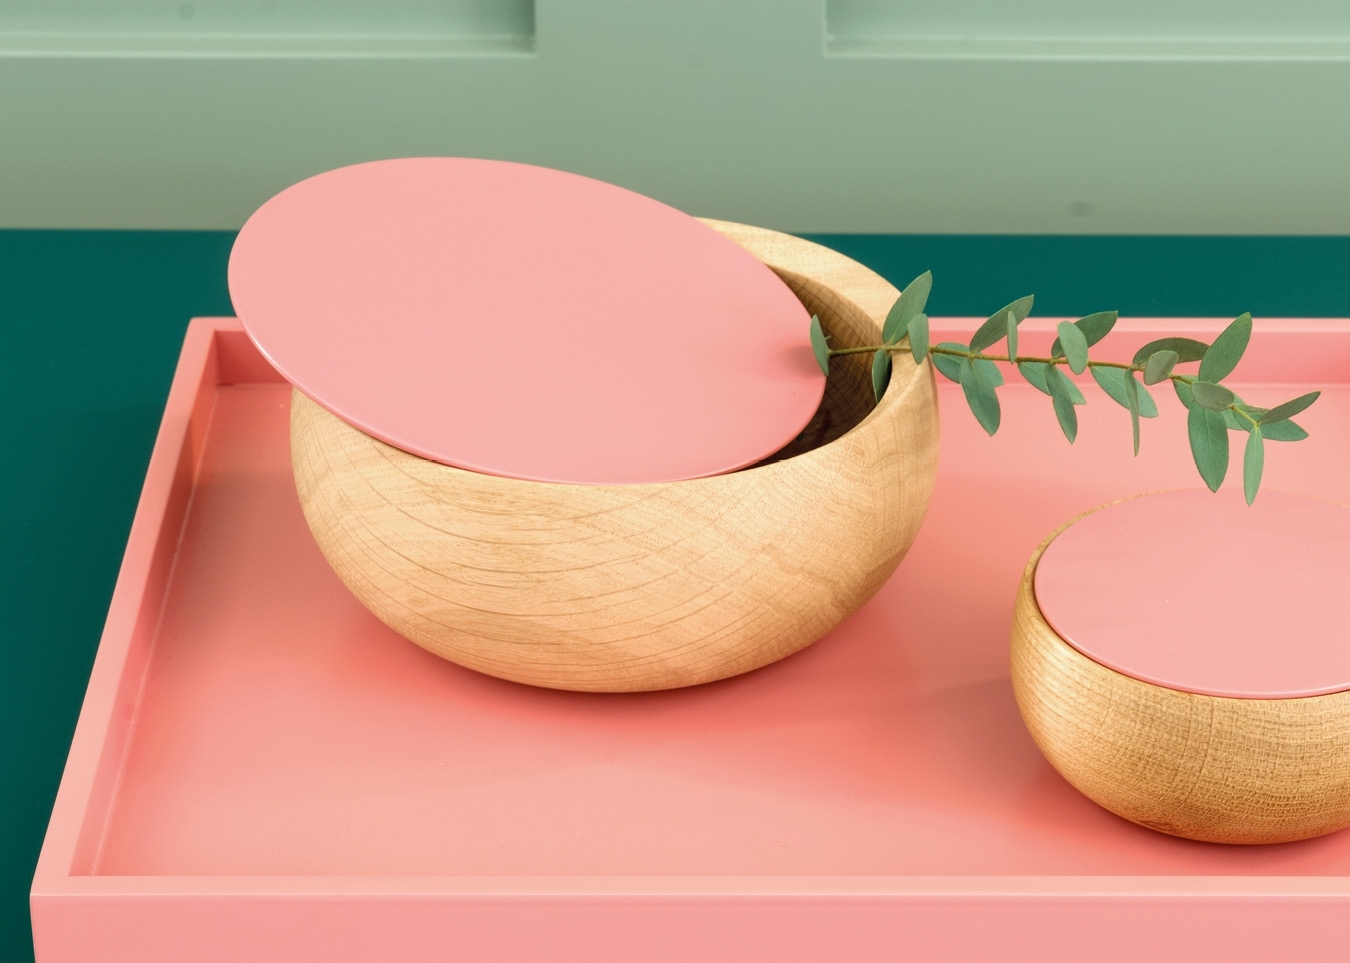 Schönbuch designer bowl solid wood round oak lid pink Silje Nesdal special edition 2018